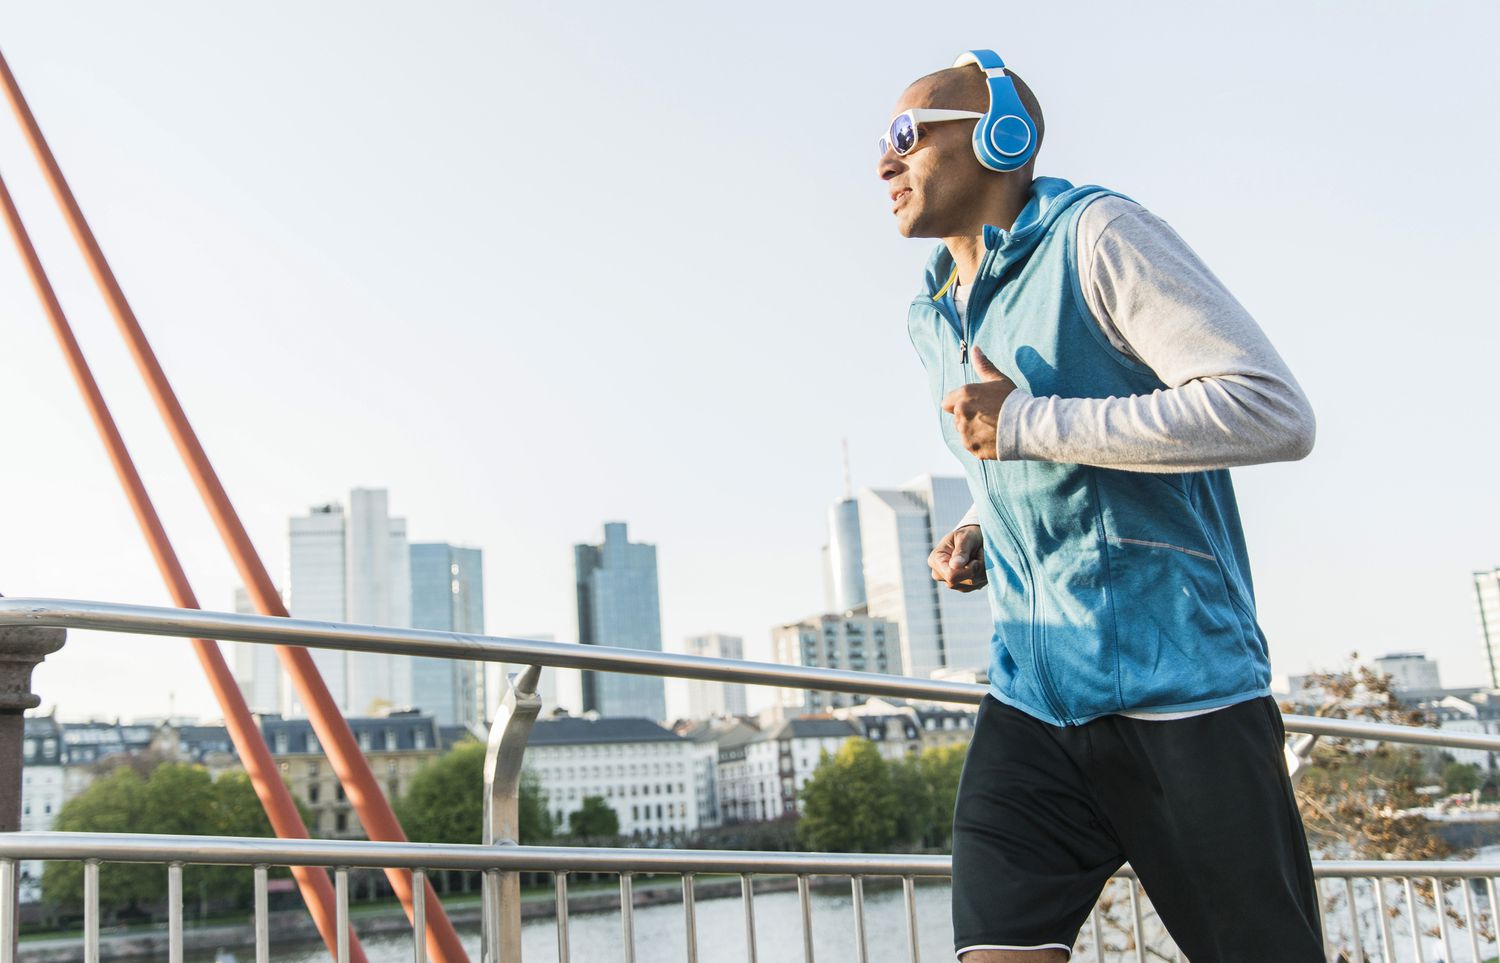 Germany, Frankfurt, man wearing headphones jogging on bridge